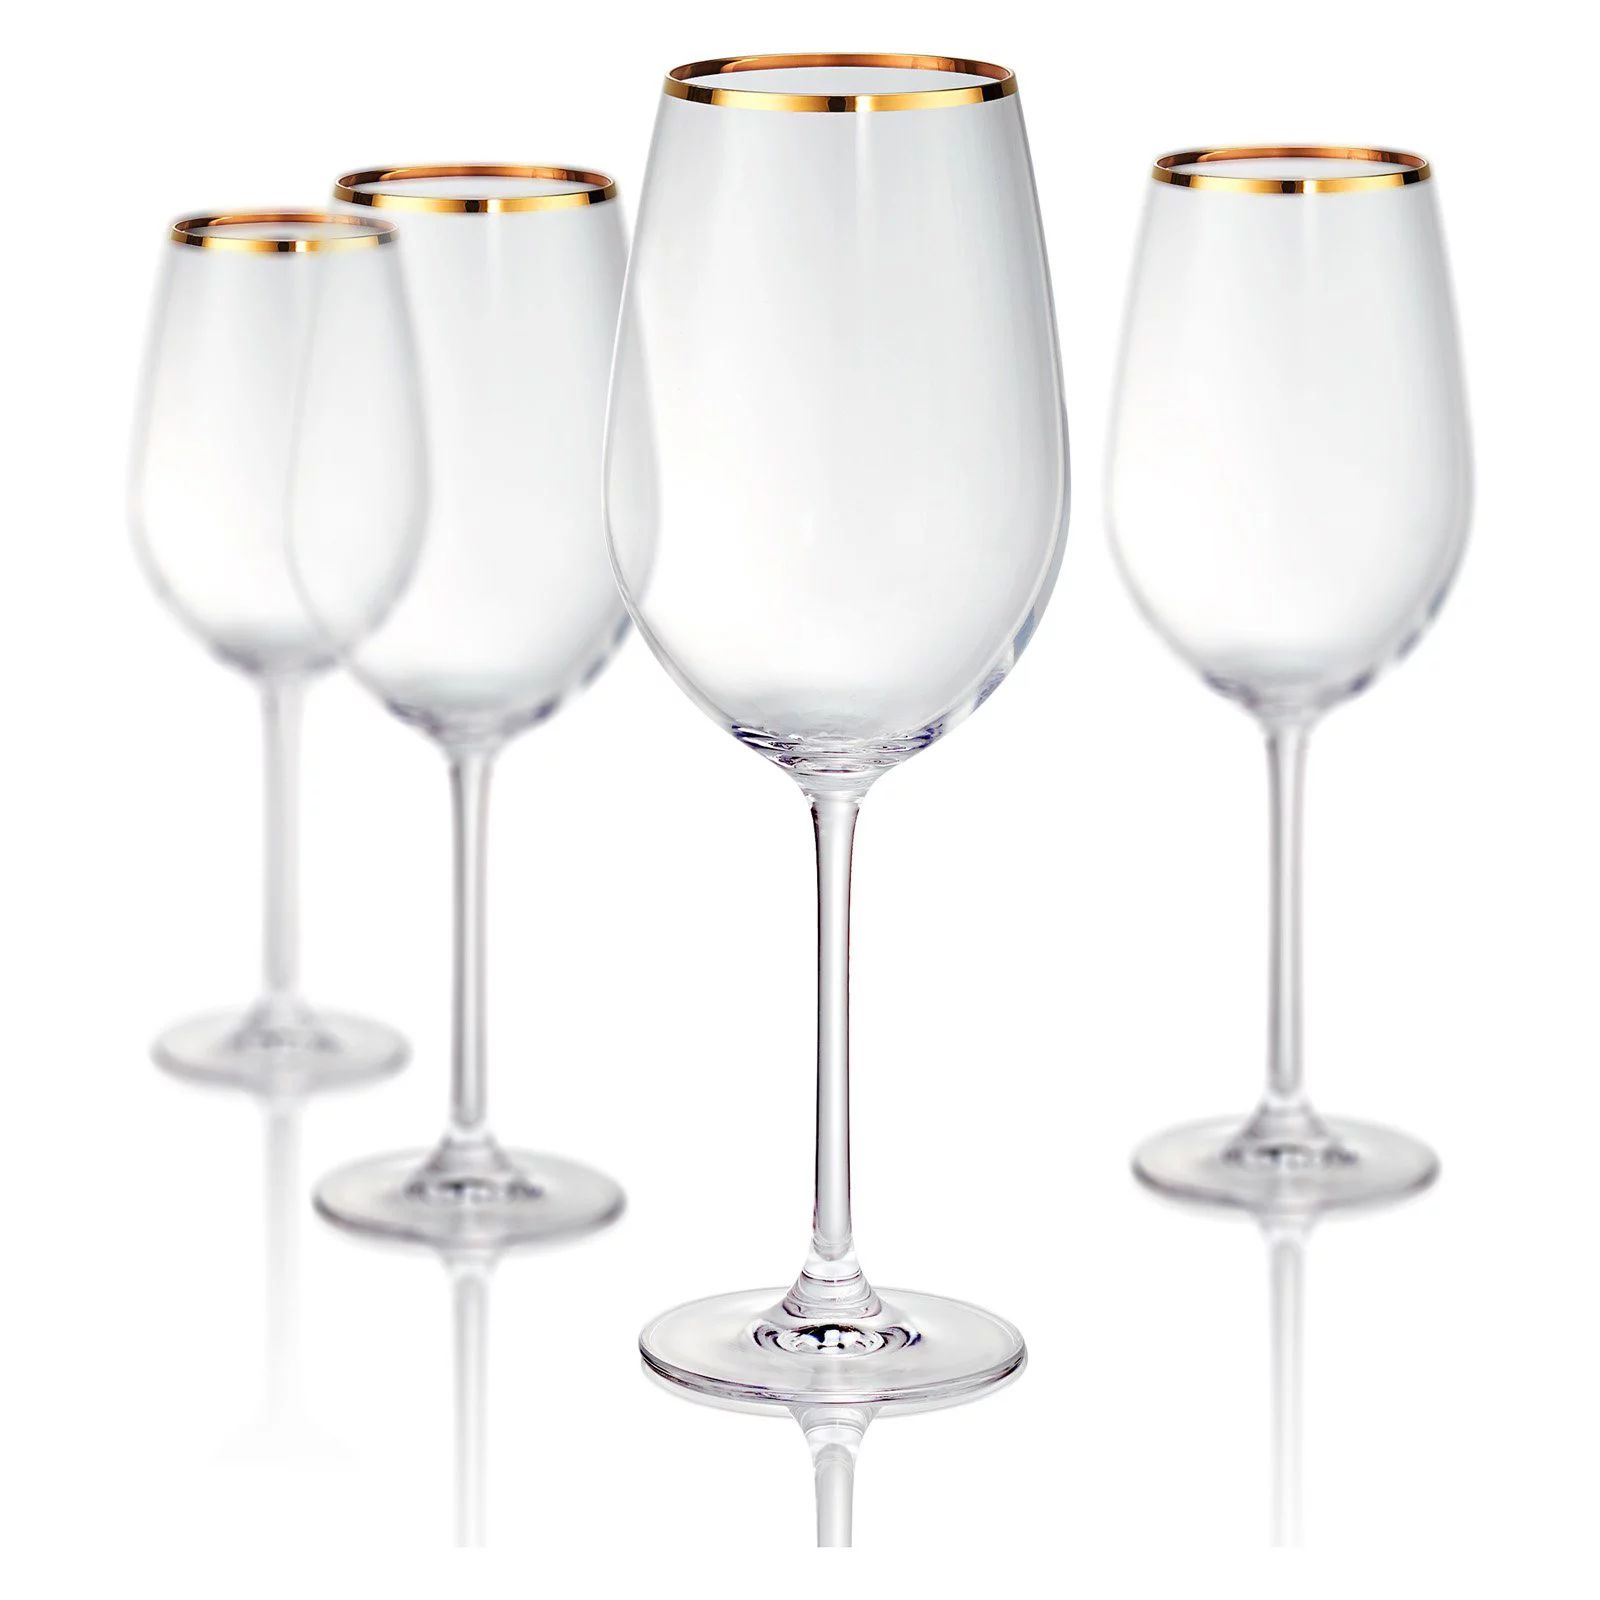 Artland Gold Band Bordeaux Wine Glasses - Set of 4 | Walmart (US)